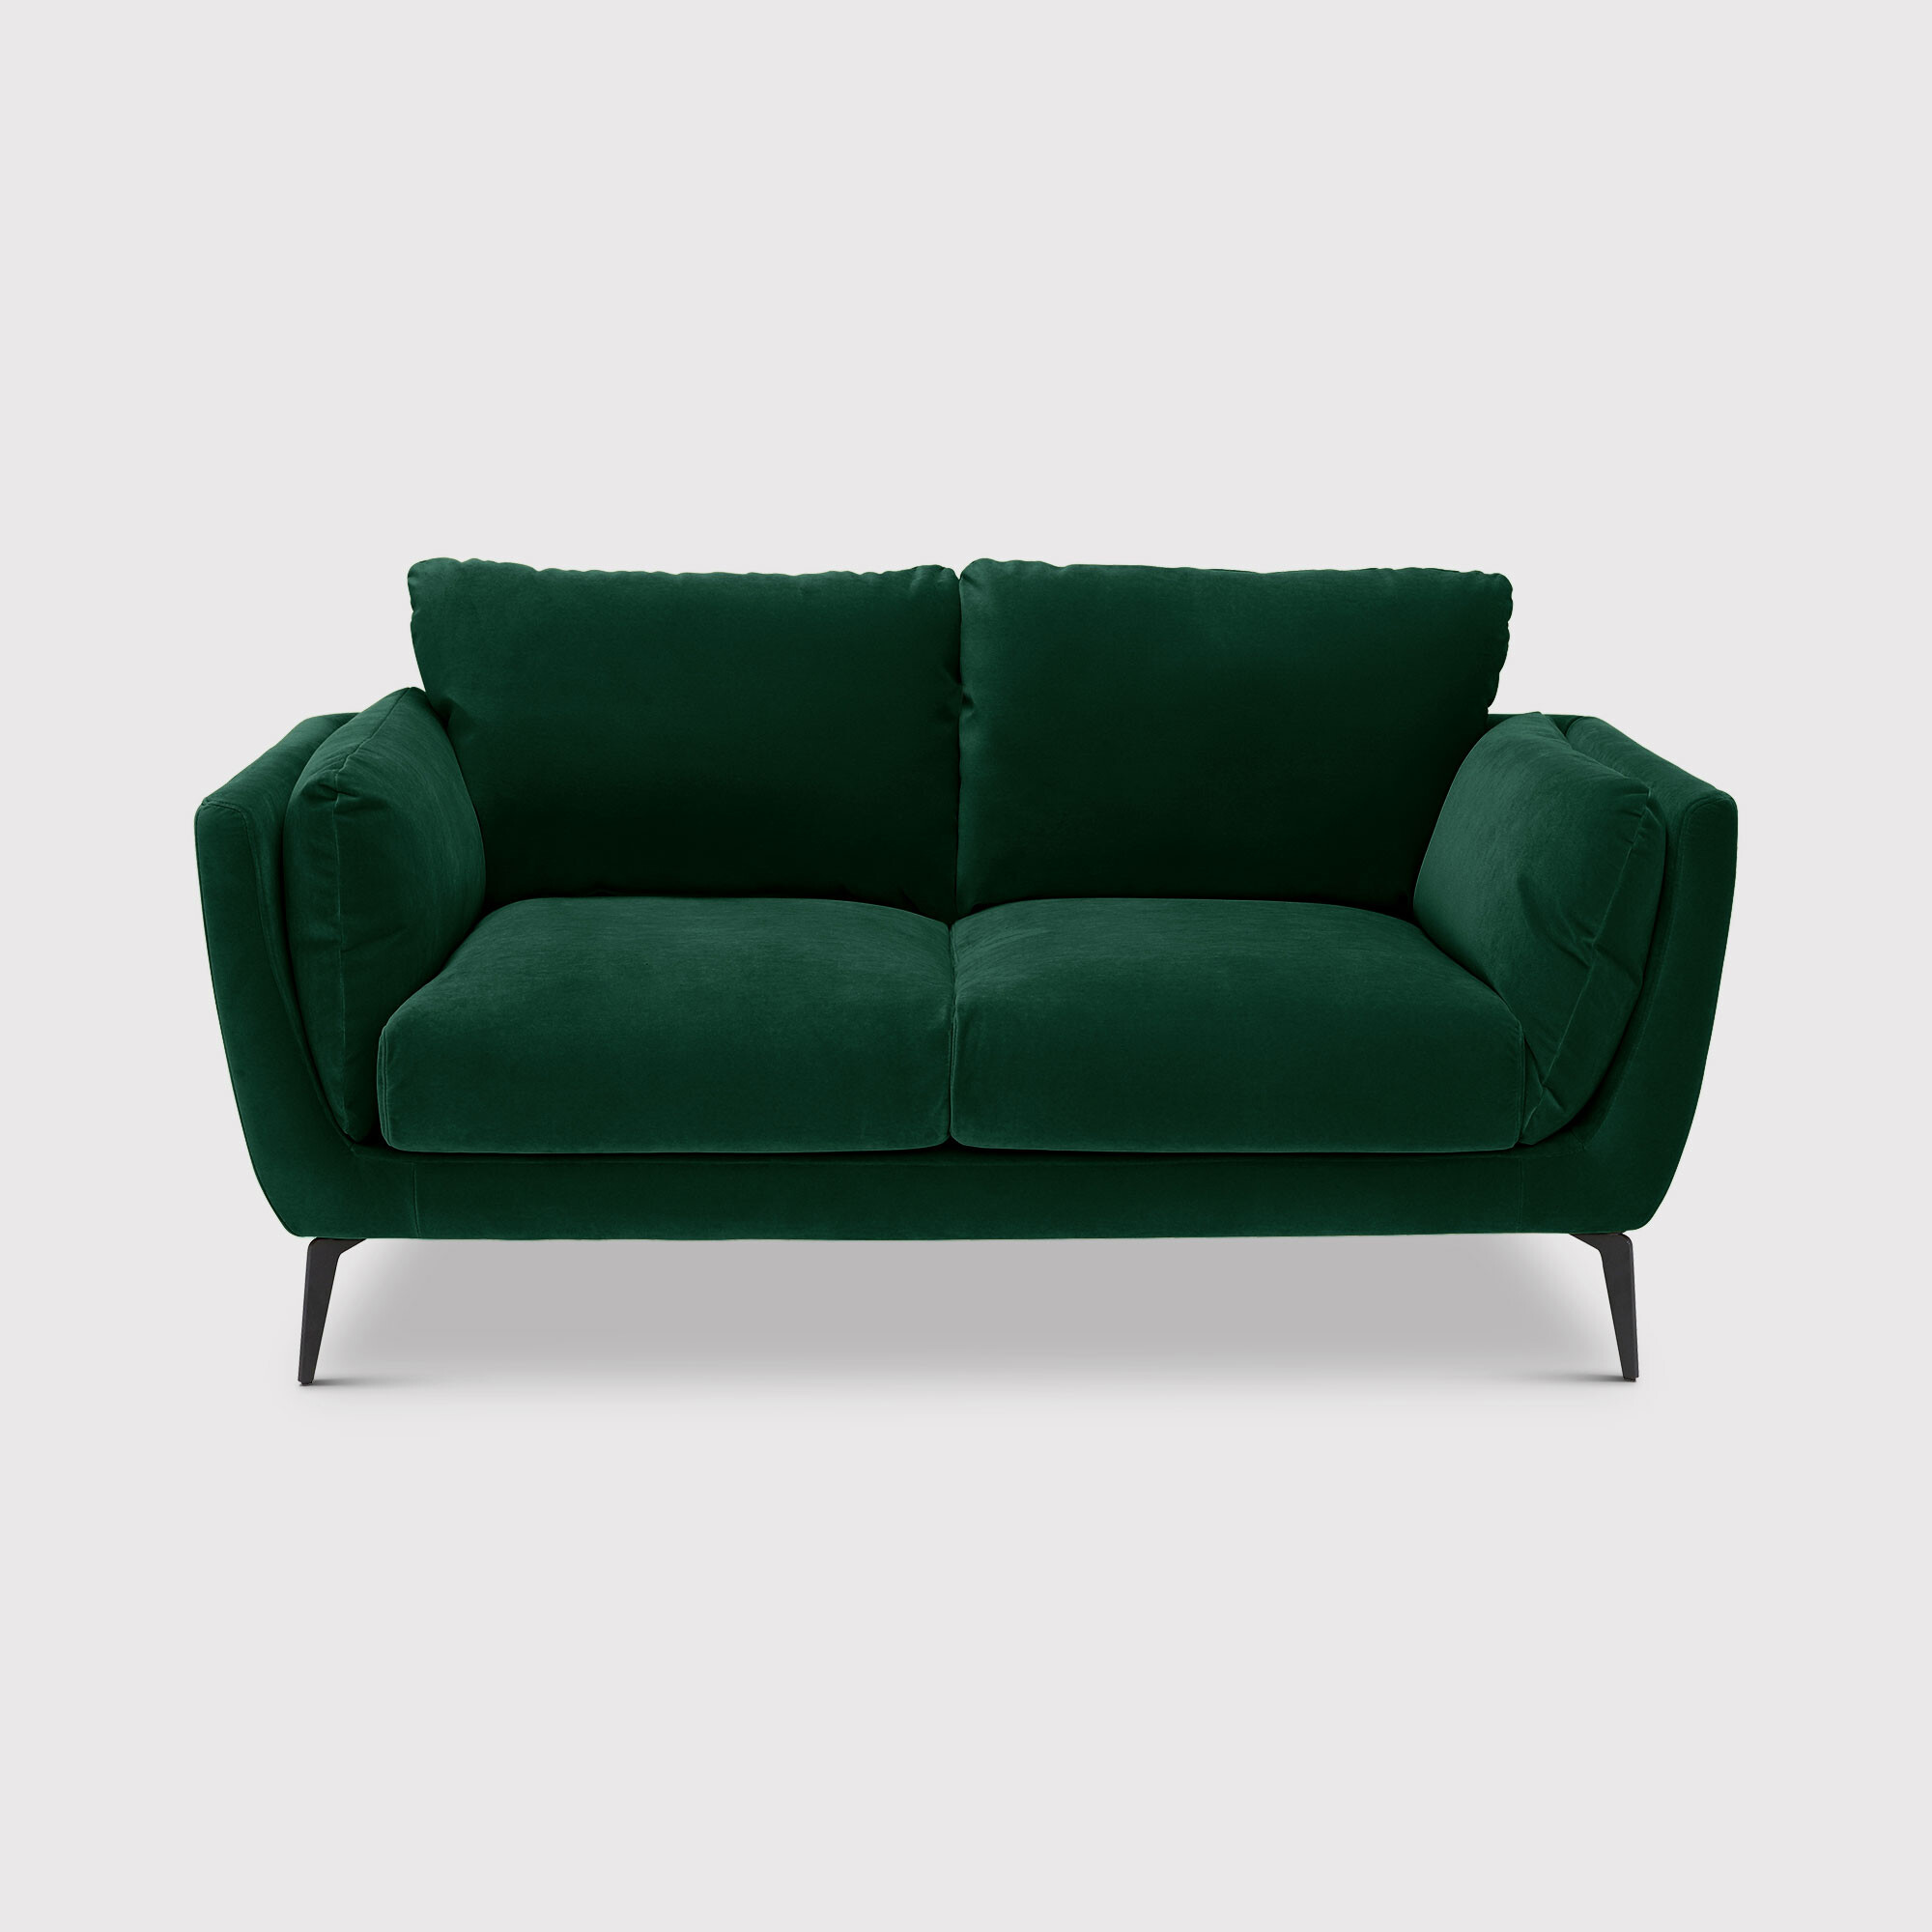 Boone 2 Seater Sofa, Green Fabric | Barker & Stonehouse